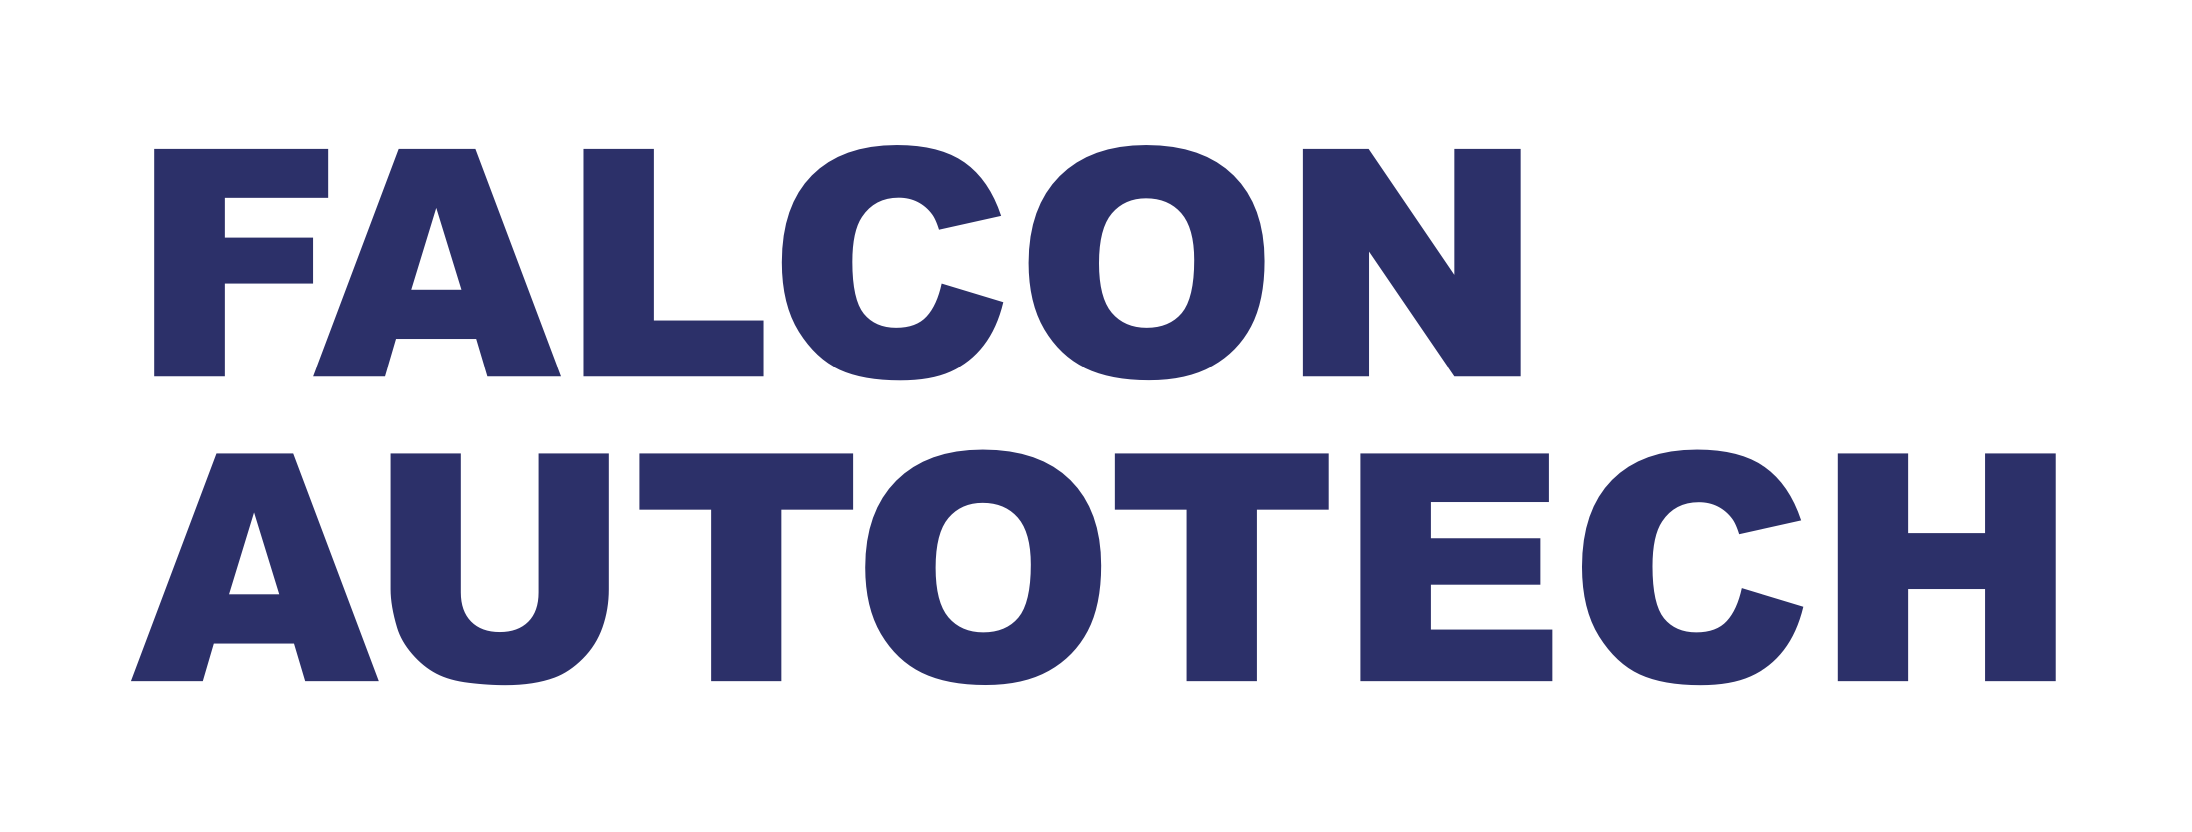 Falcon Autotech Logo.png